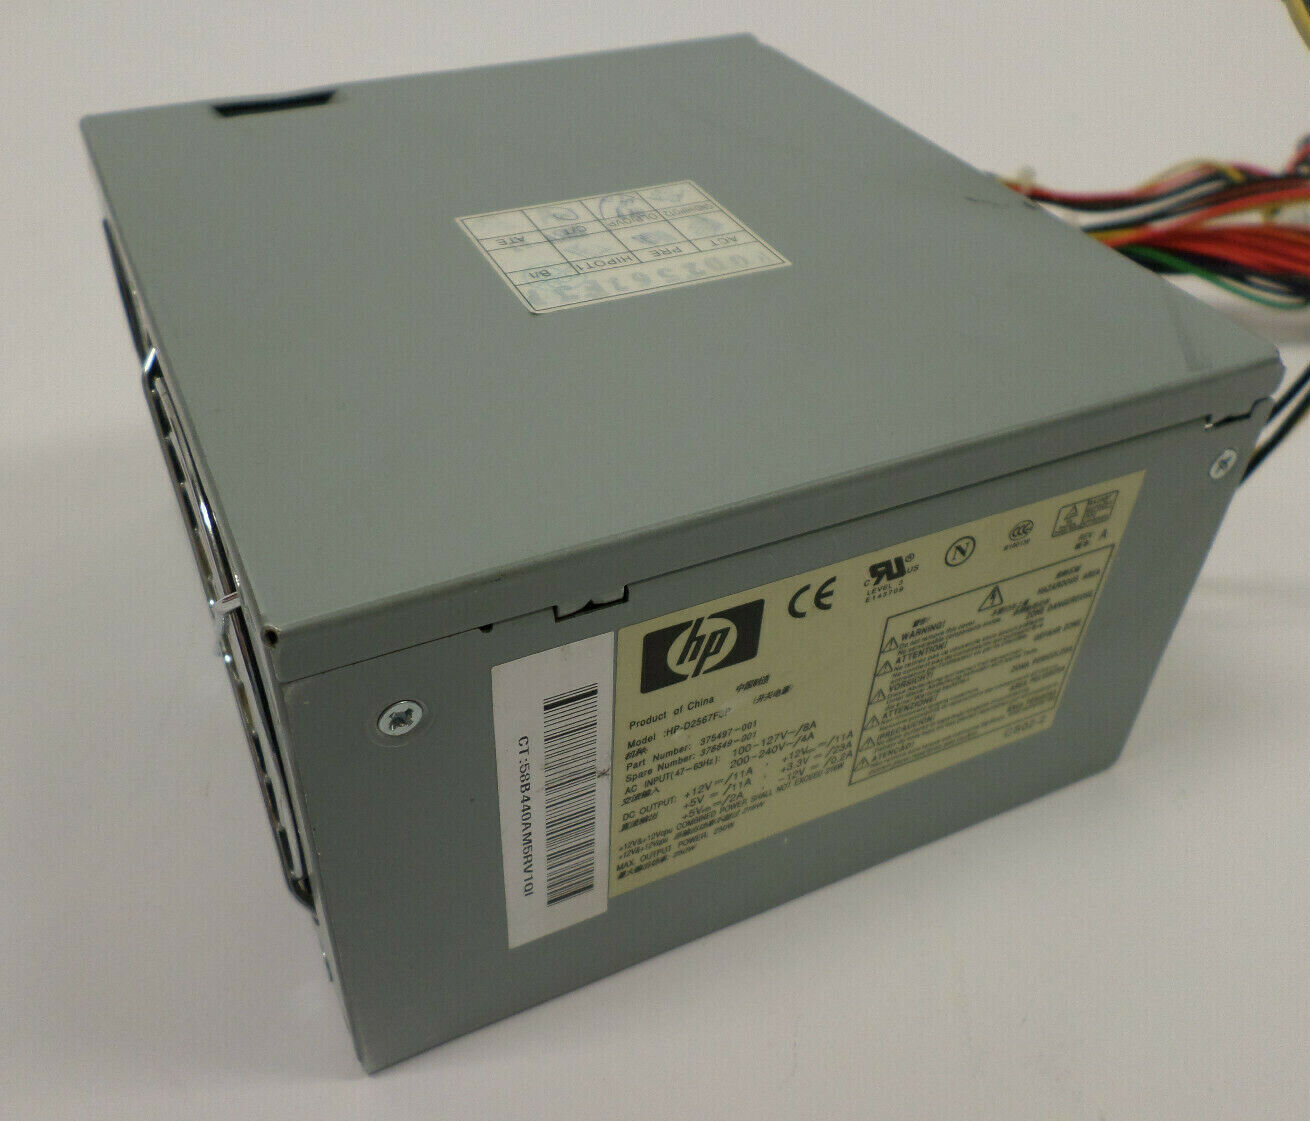 BESTEC (HP) Power Supply Model: ATX-250 12Z 180W P/N: 440569-001 444813-001